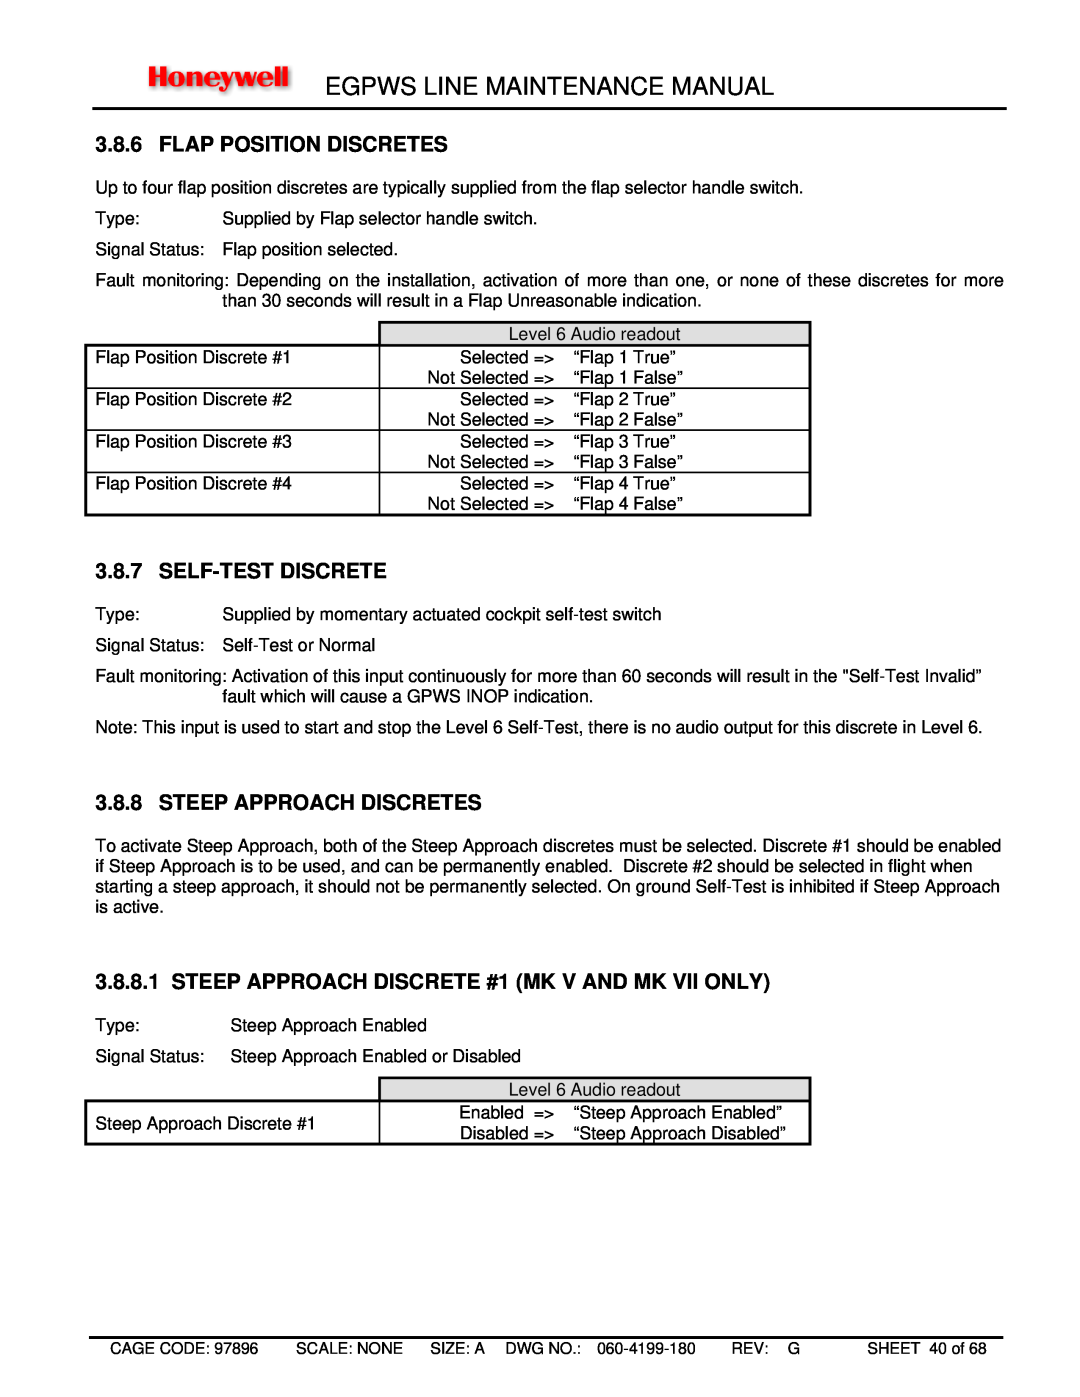 Honeywell MK VI manual Flap Position Discretes, Self-Testdiscrete, Steep Approach Discretes, Egpws Line Maintenance Manual 